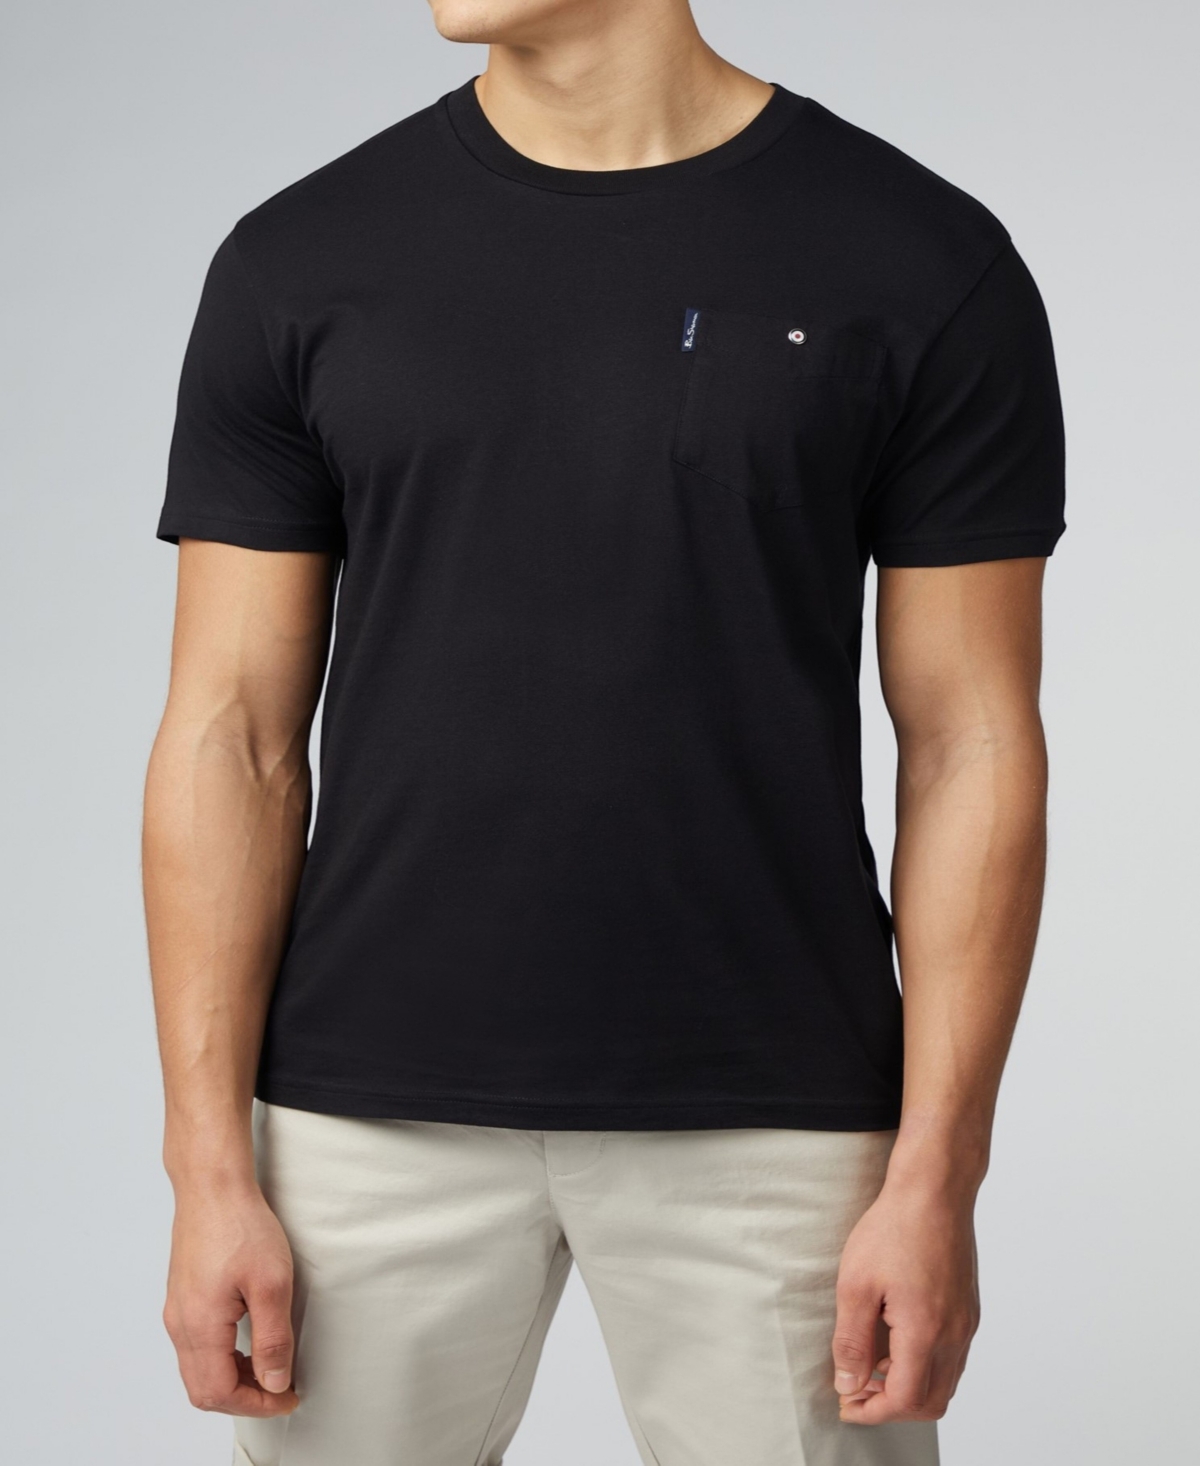 Men's Signature Pocket Short Sleeve T-shirt - Teal